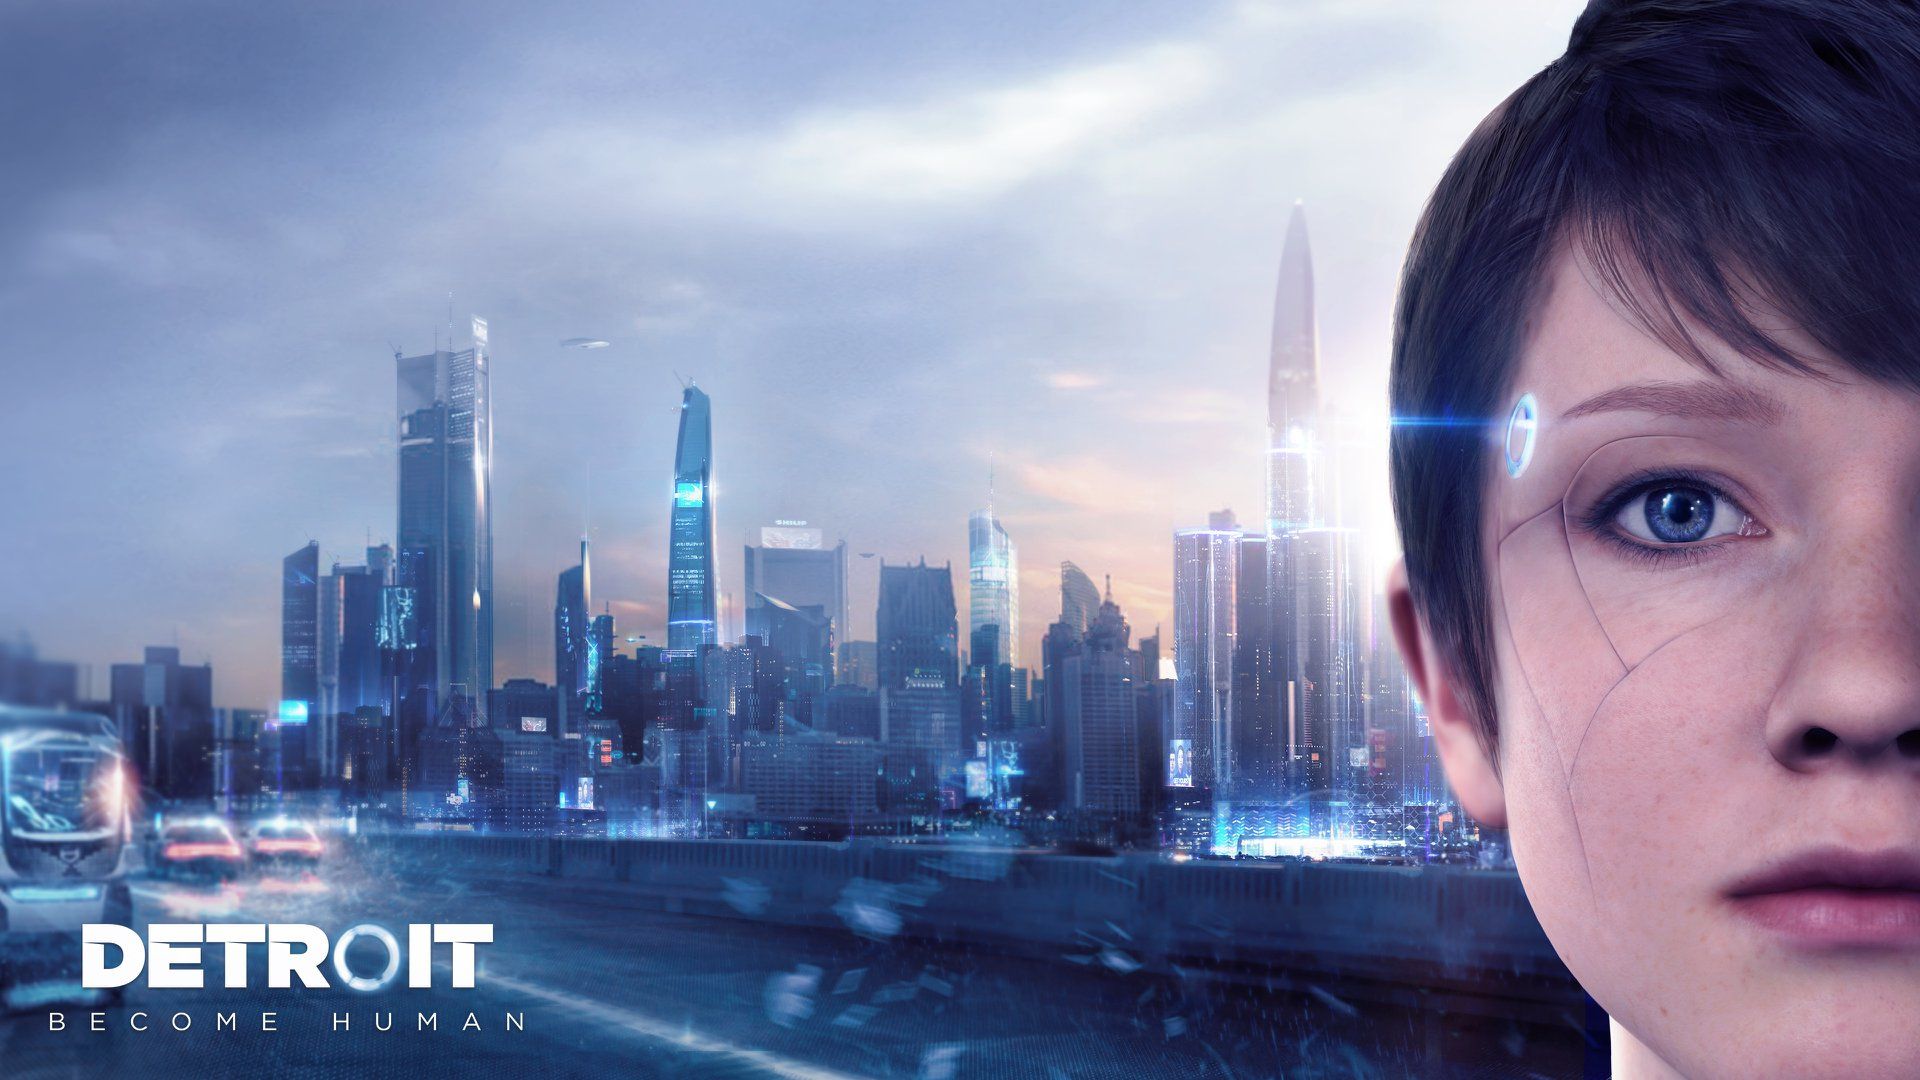 Kara Detroit Become Human, HD Games, 4k Wallpaper, Image